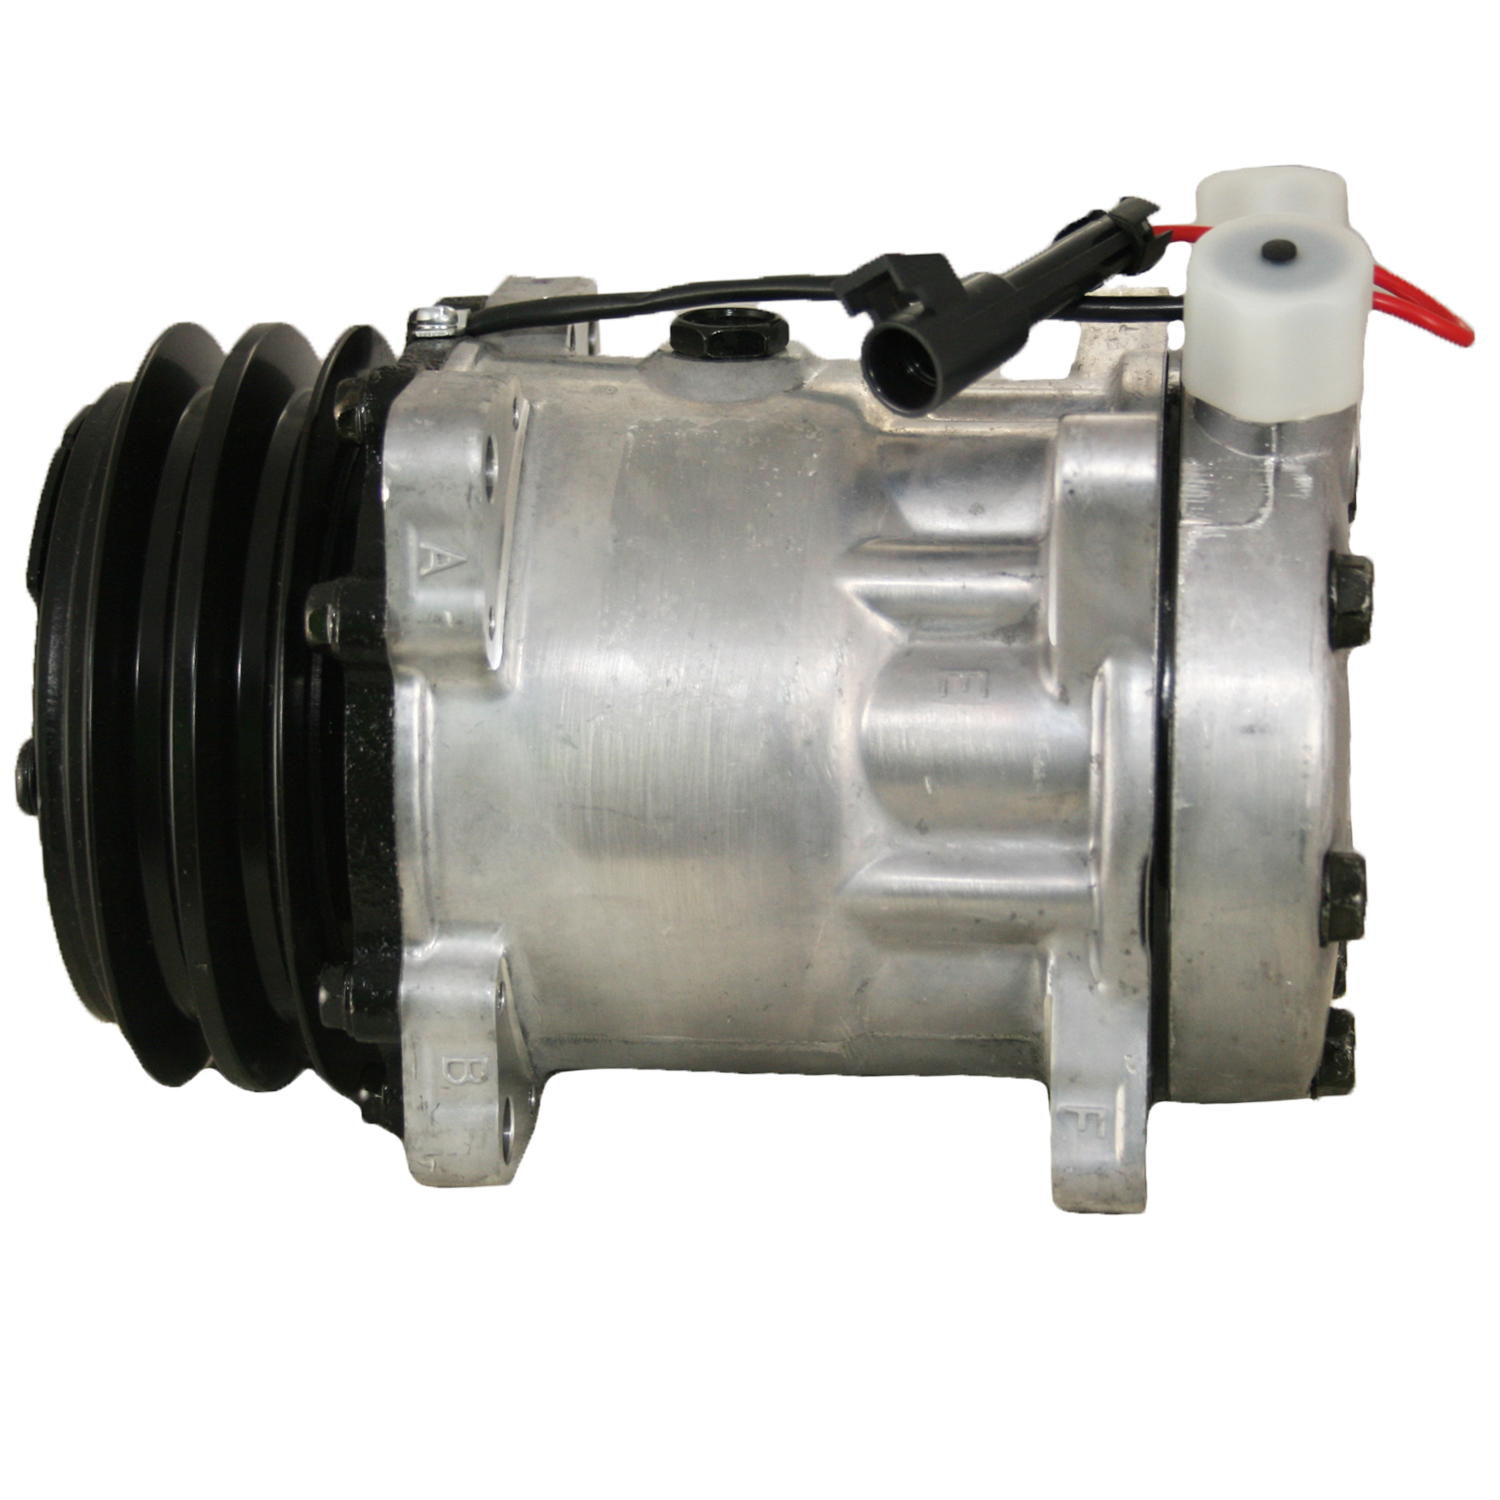 TCW Compressor 40561.203NEW New Product Image field_60b6a13a6e67c